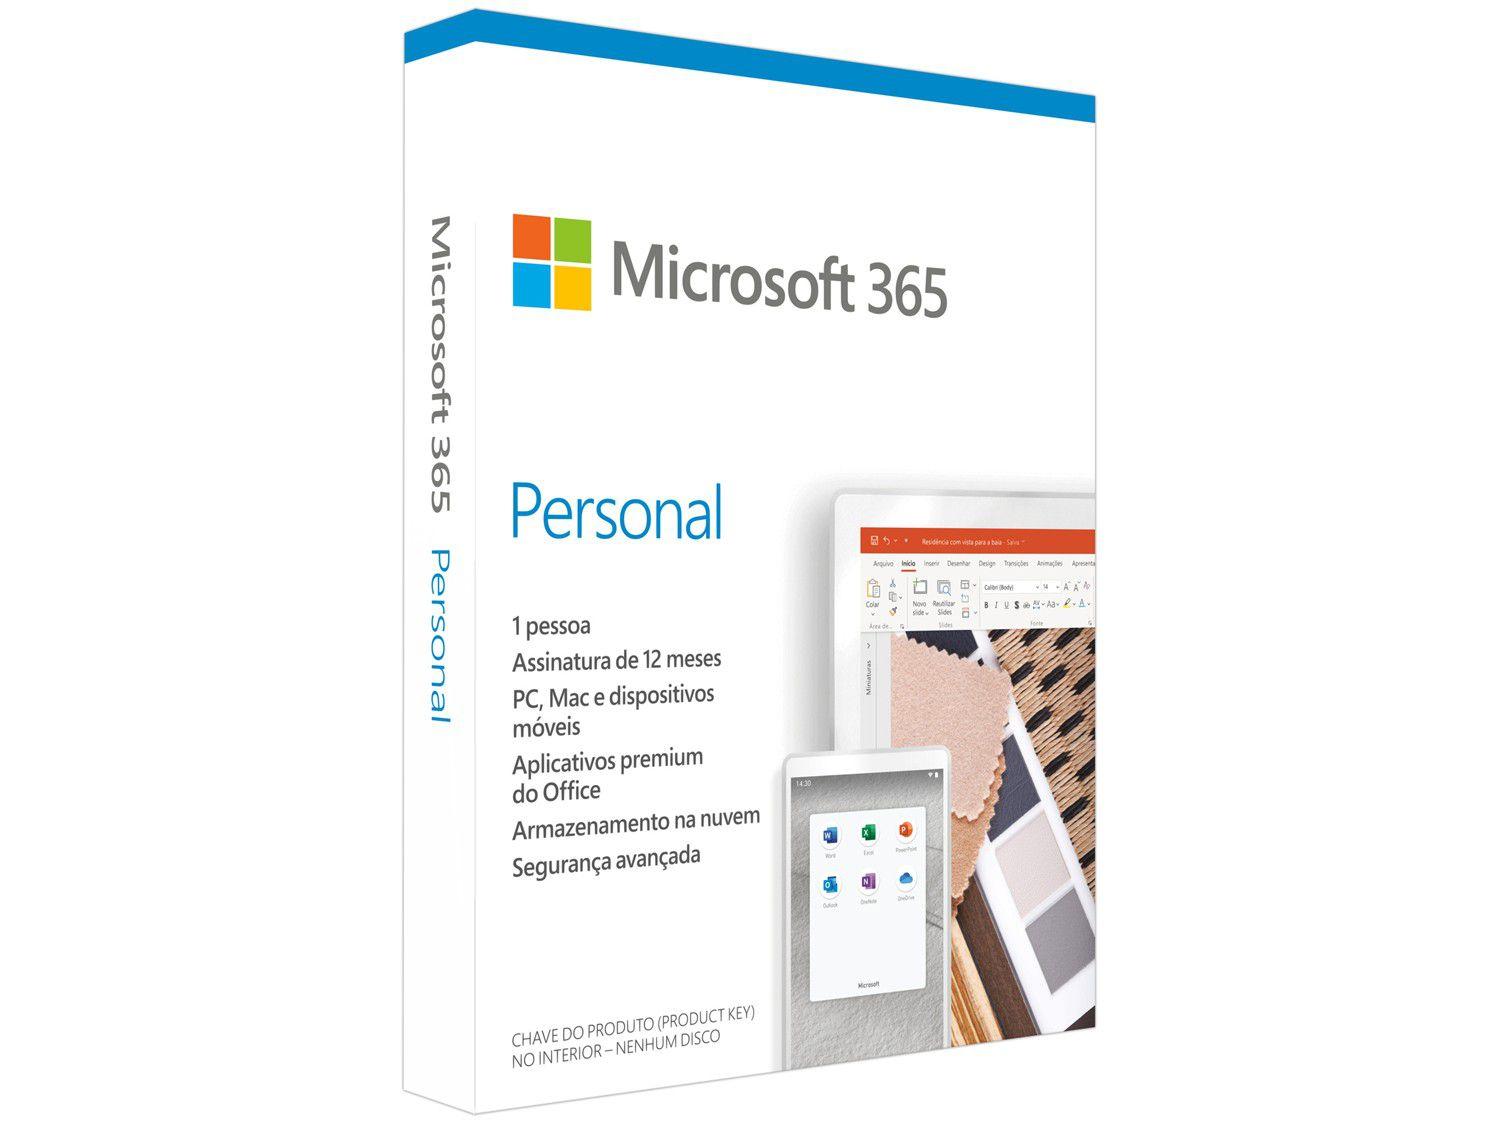 Microsoft 365 Personal Office 365 apps 1TB - 1 Usuário Assinatura Anual -  Software - Magazine Luiza